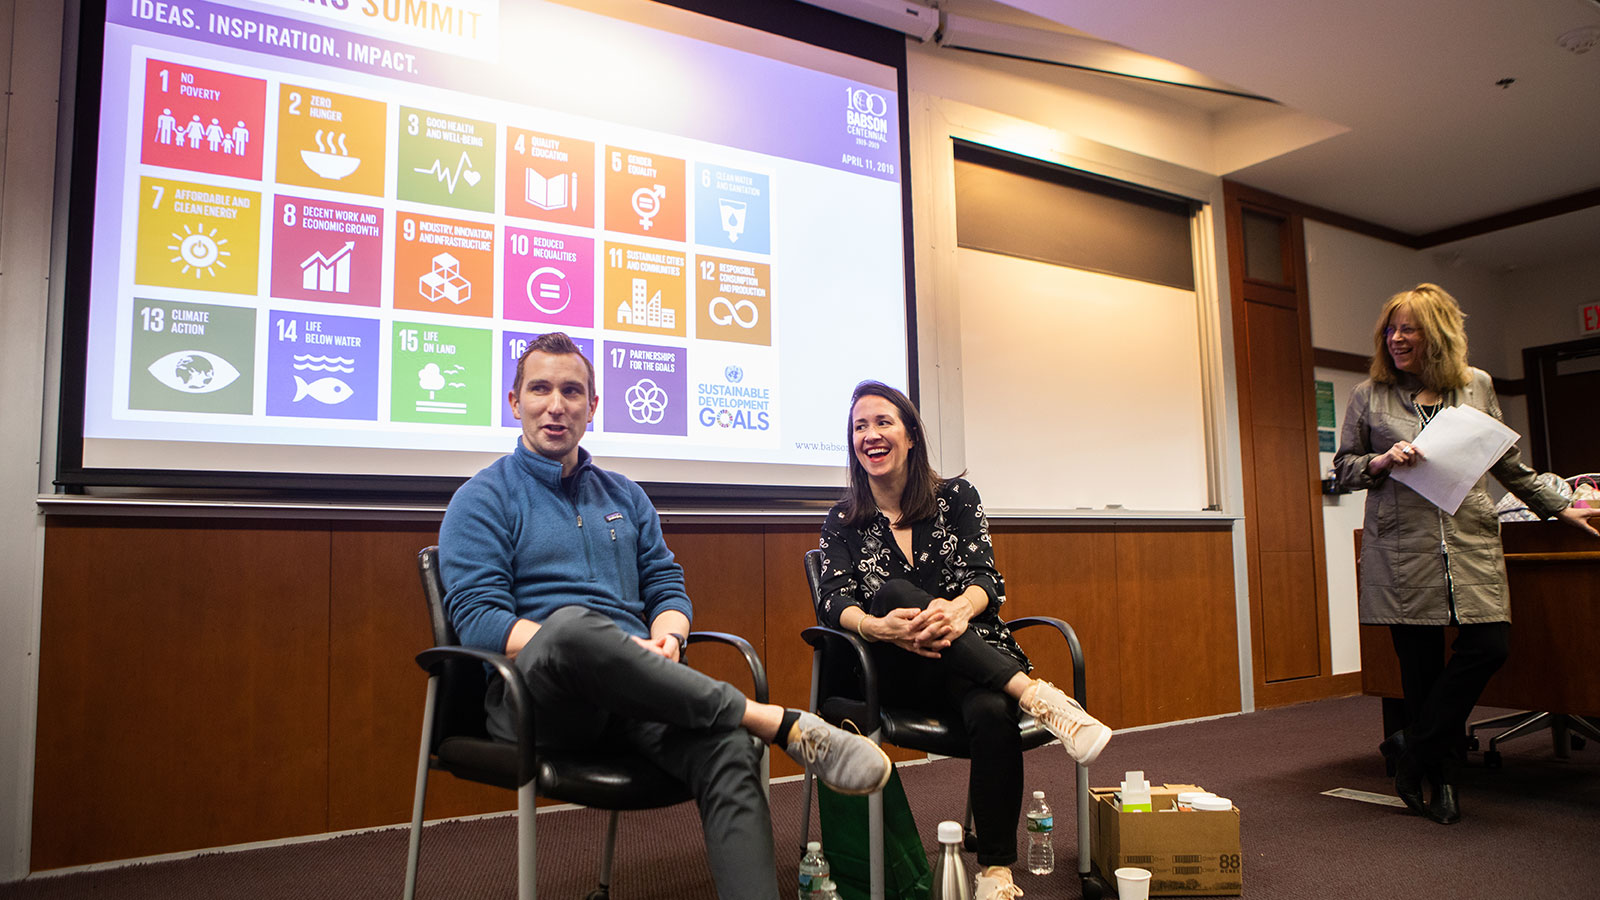 Babson entrepreneurs addressing the Global Goals